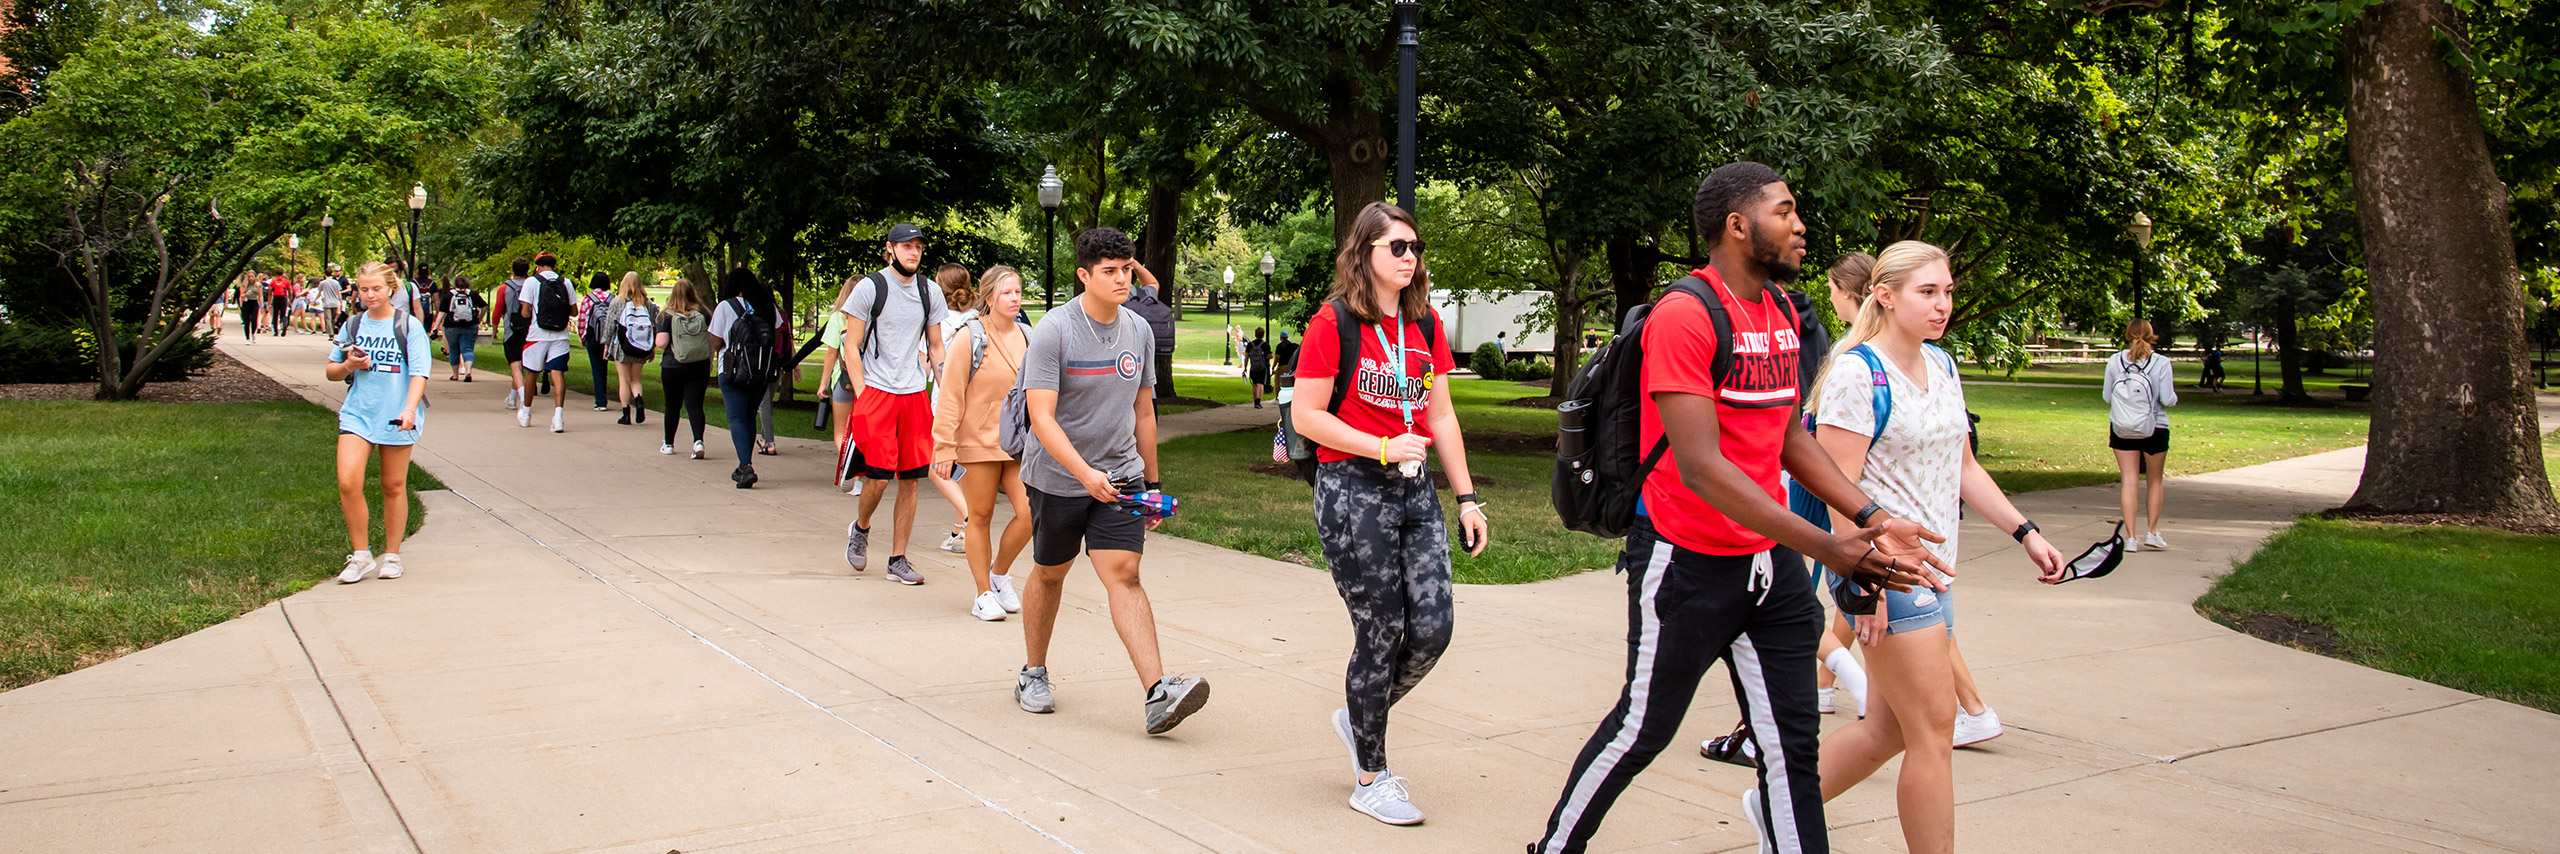 Students walking on quad